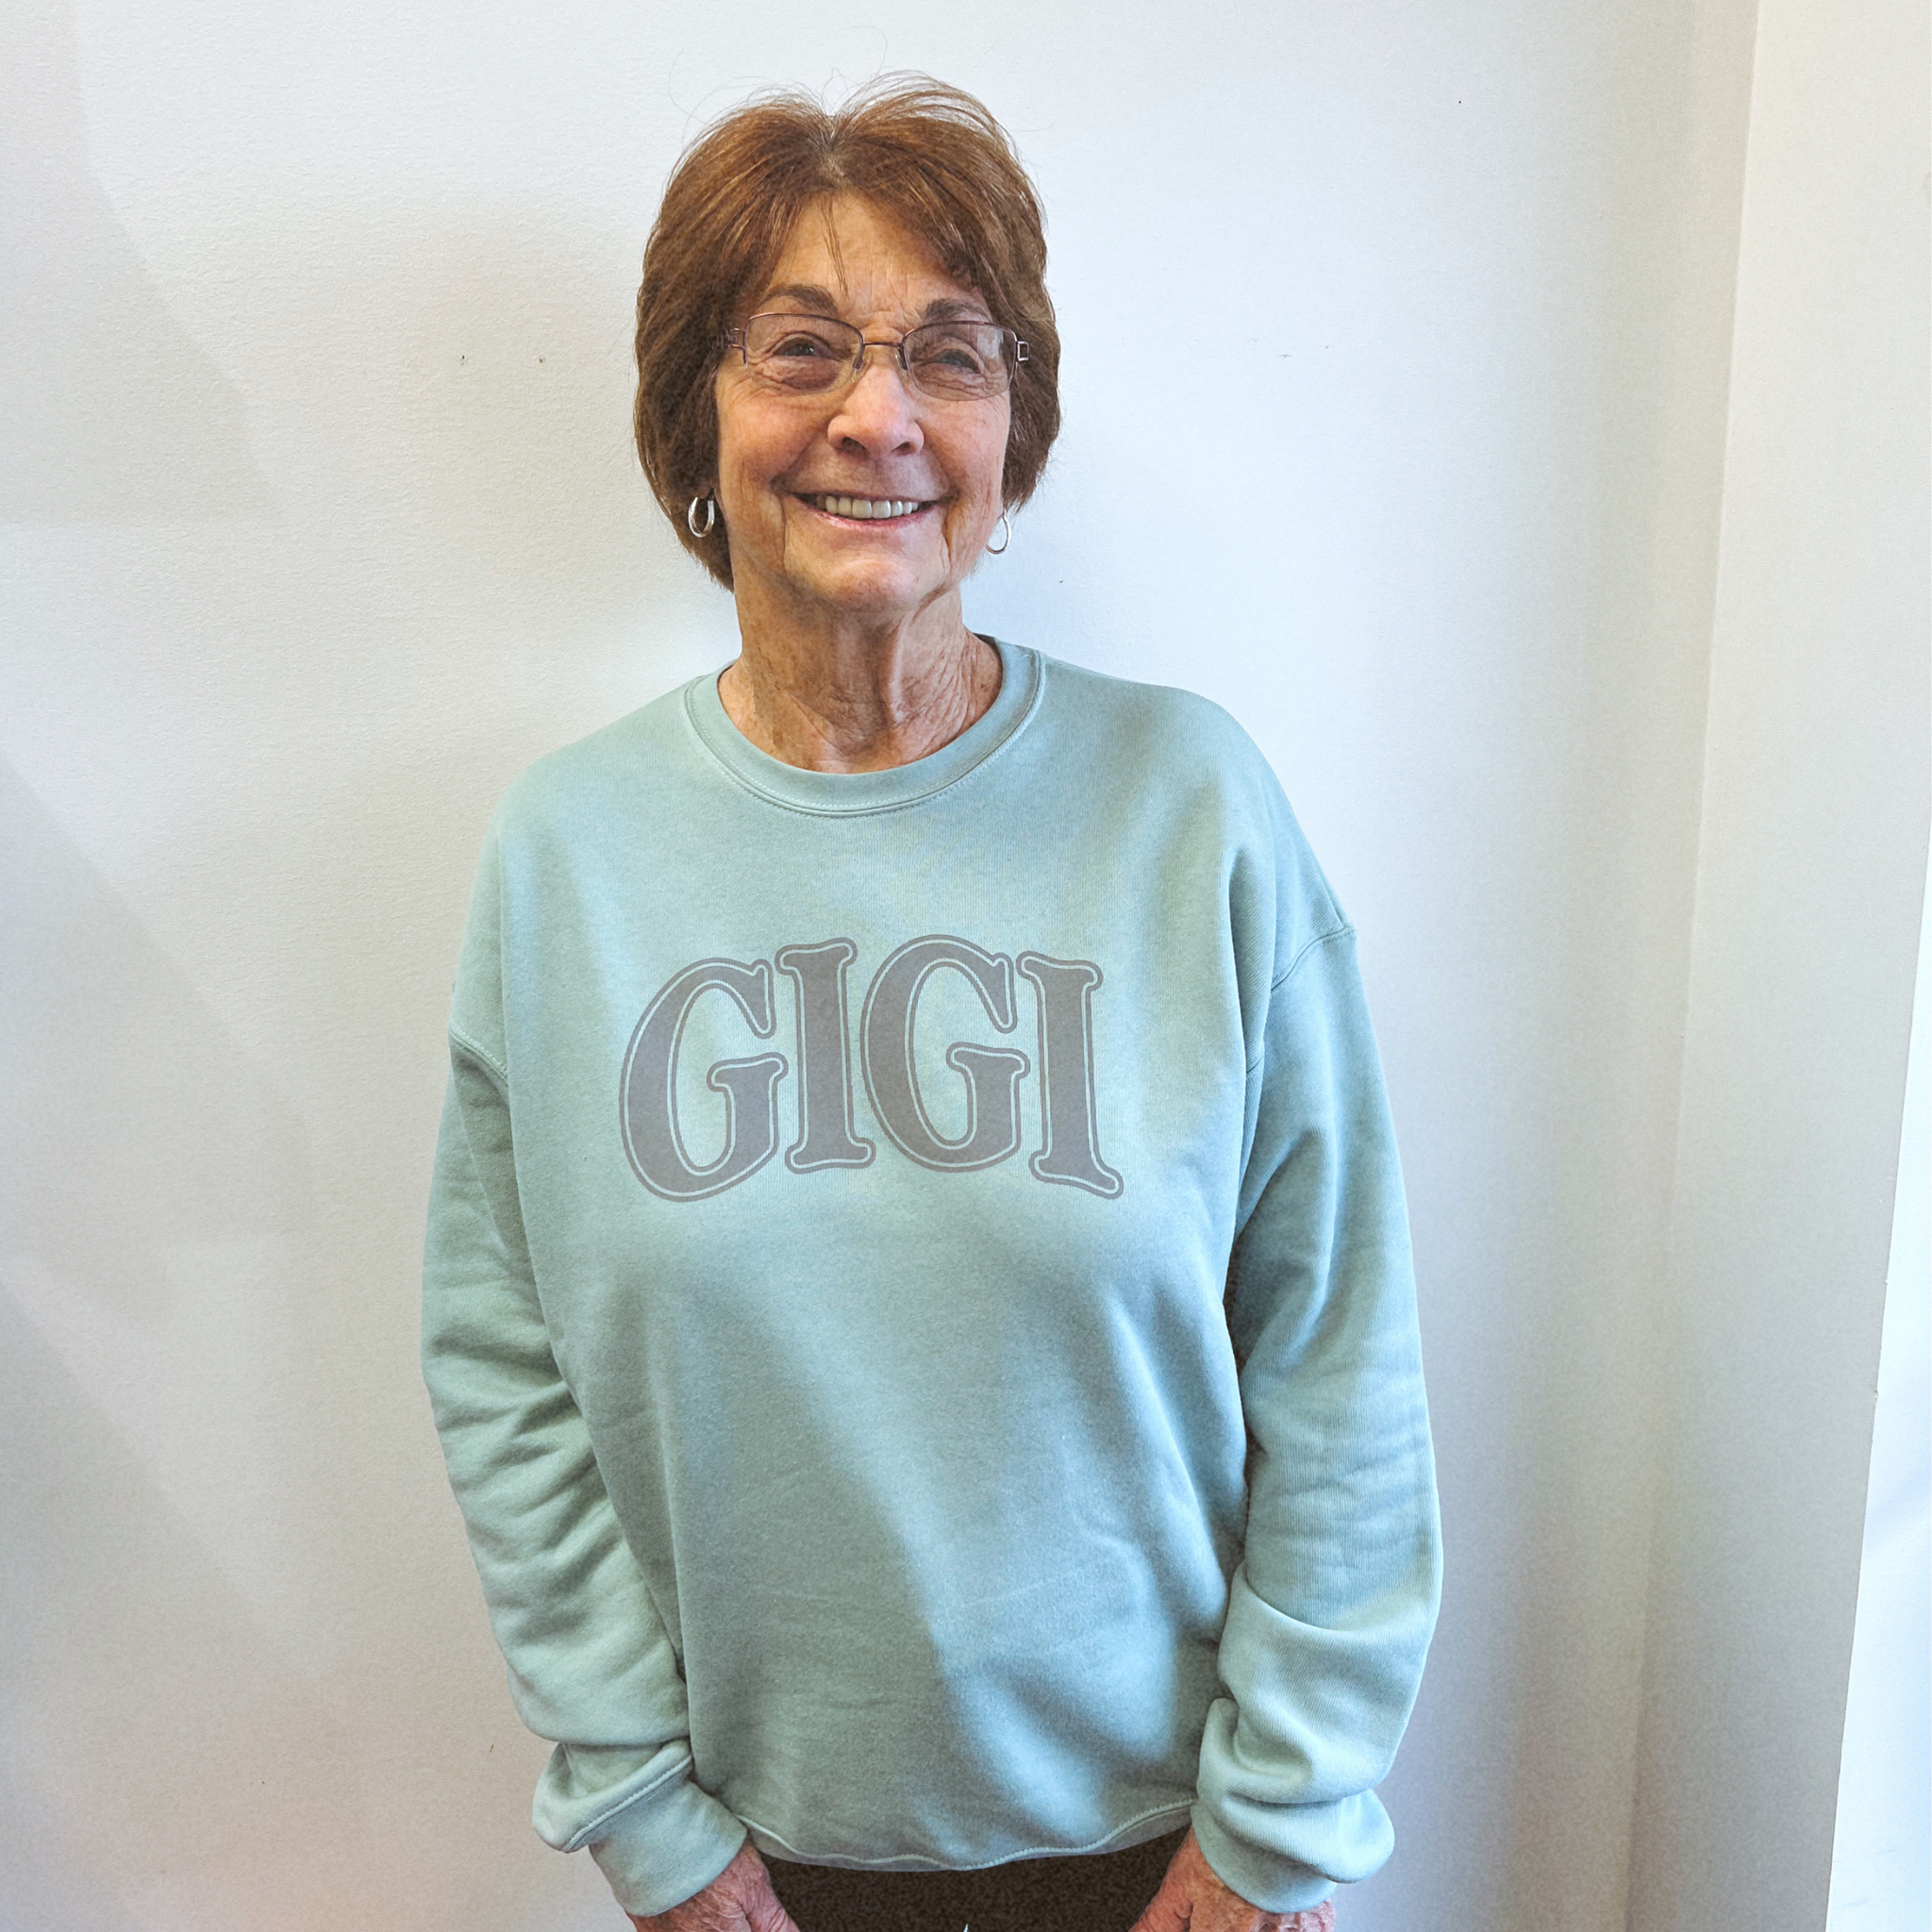 MADE TO ORDER | Grandma Name Screenprinted Sweatshirt